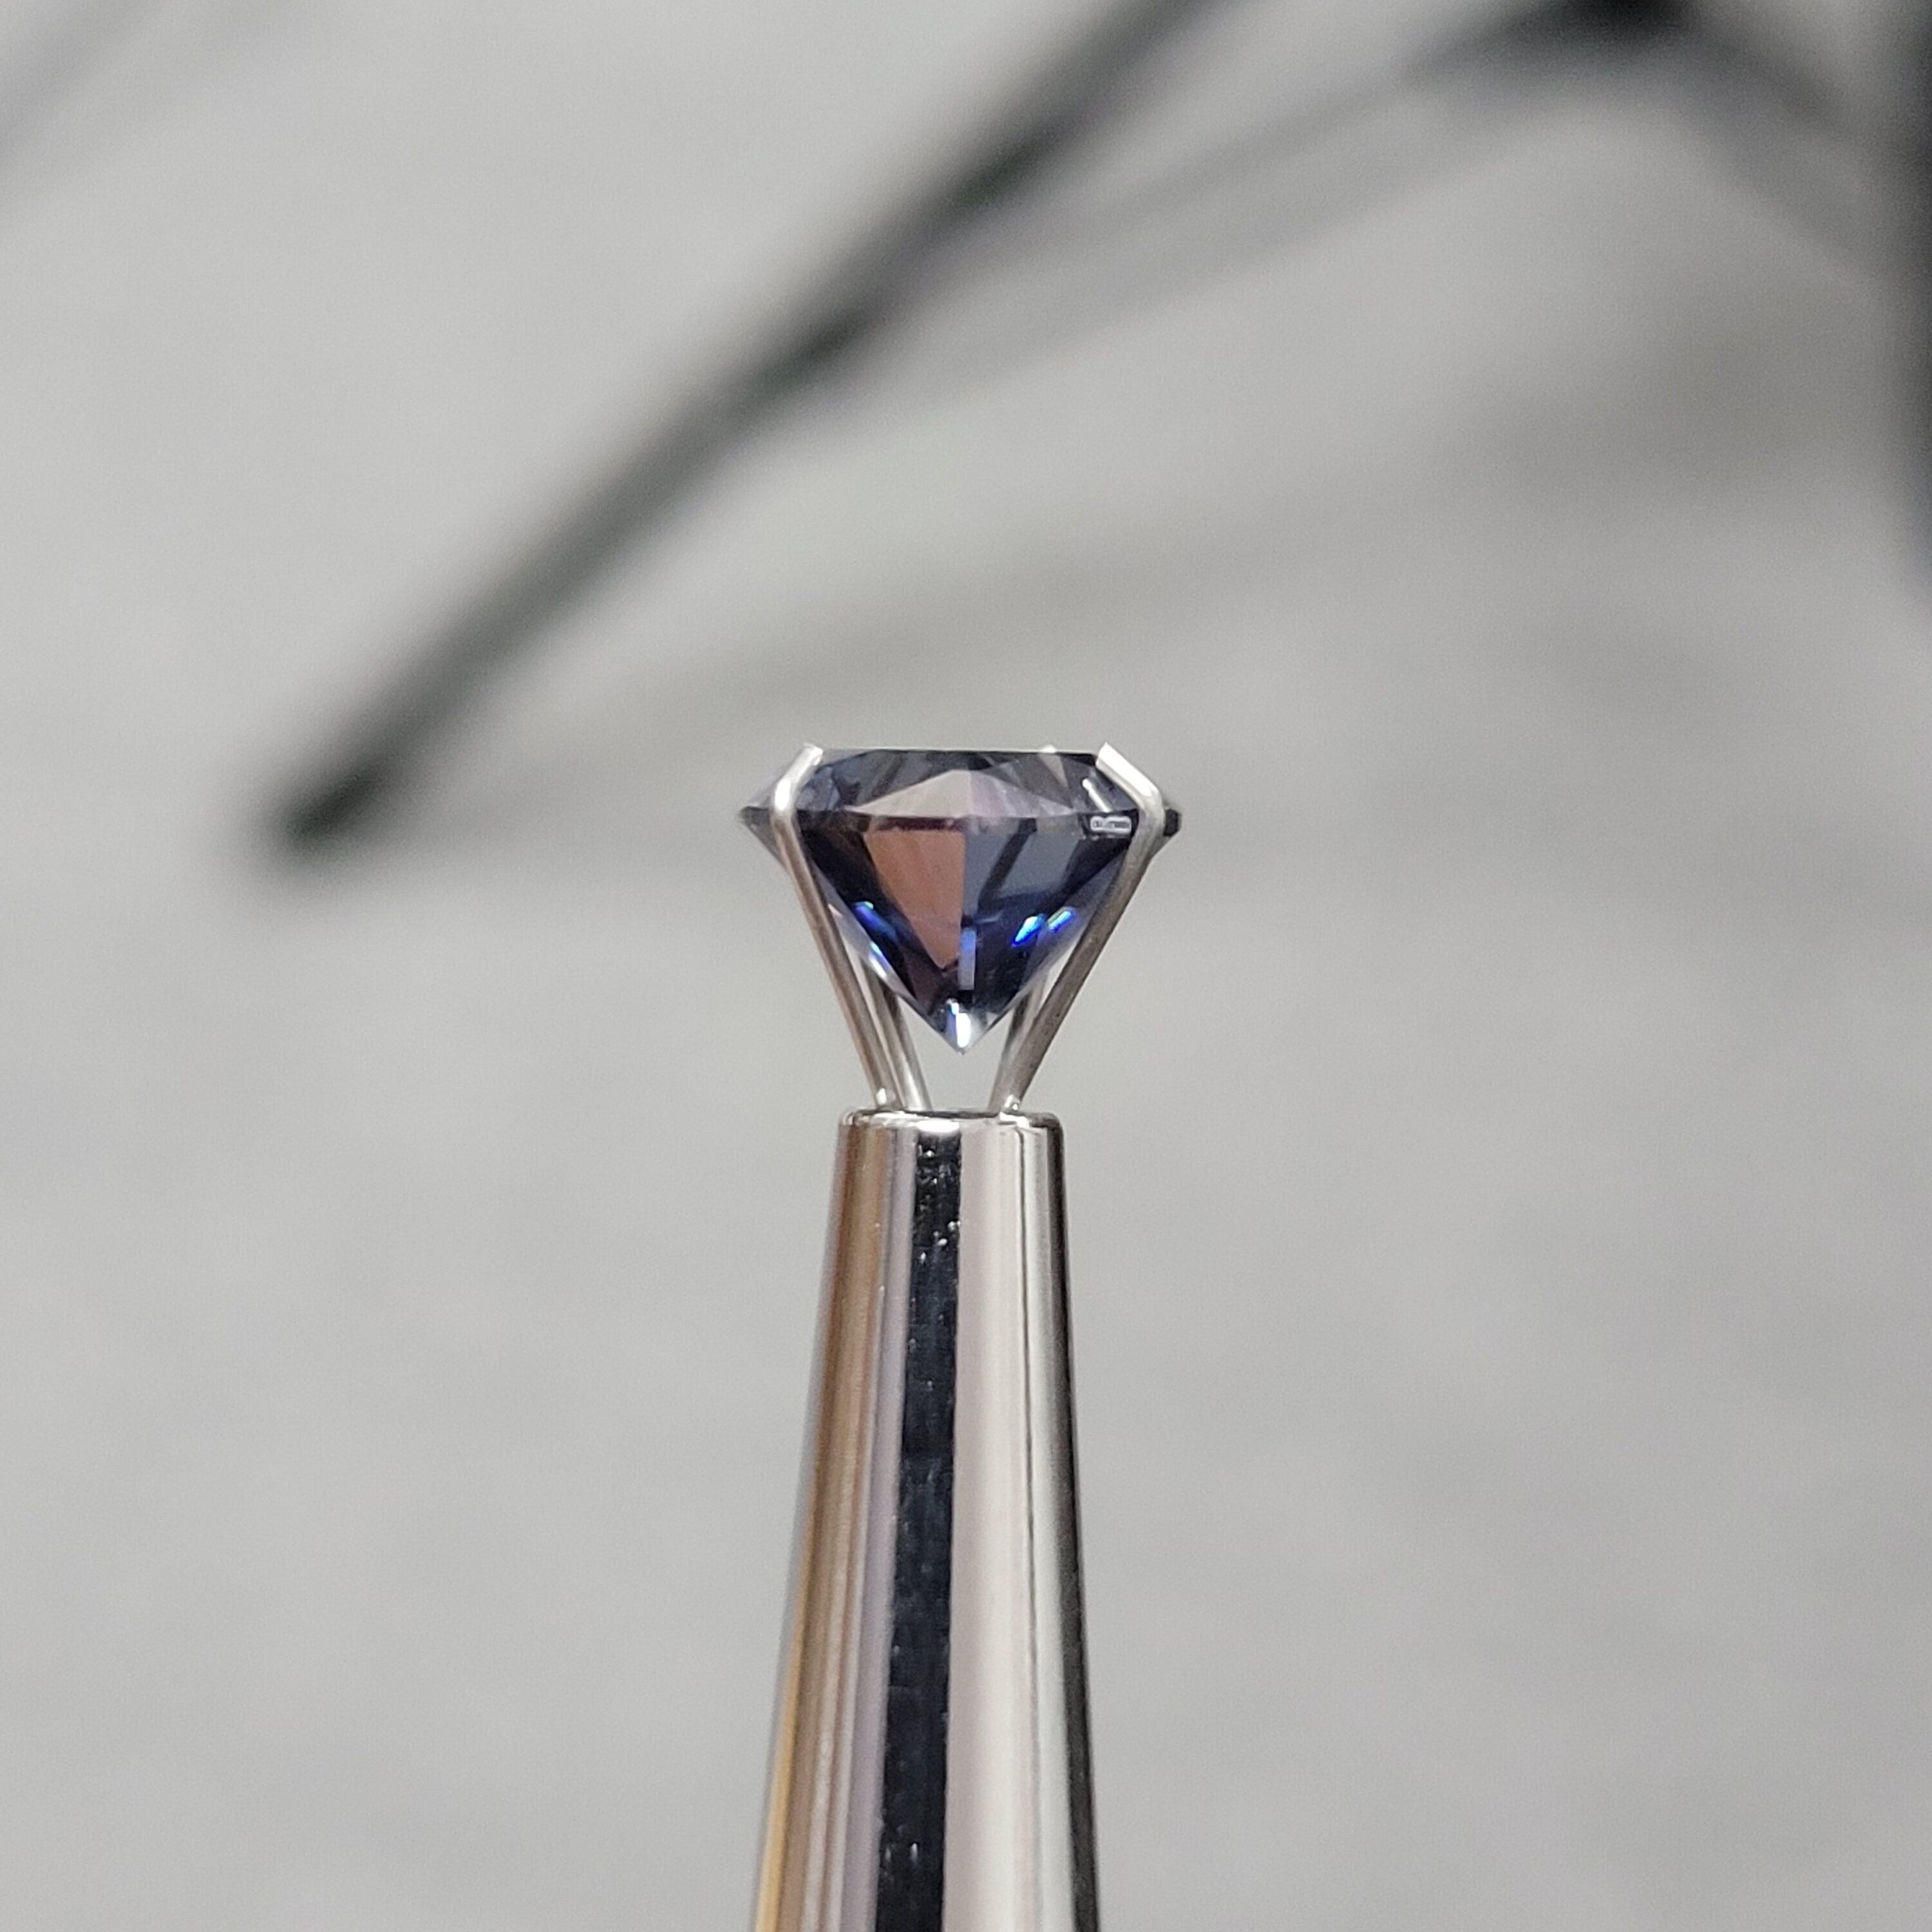 8mm 2ct loose moissanite certified vvs1 royal blue trillion cut gra laboratory gemstone